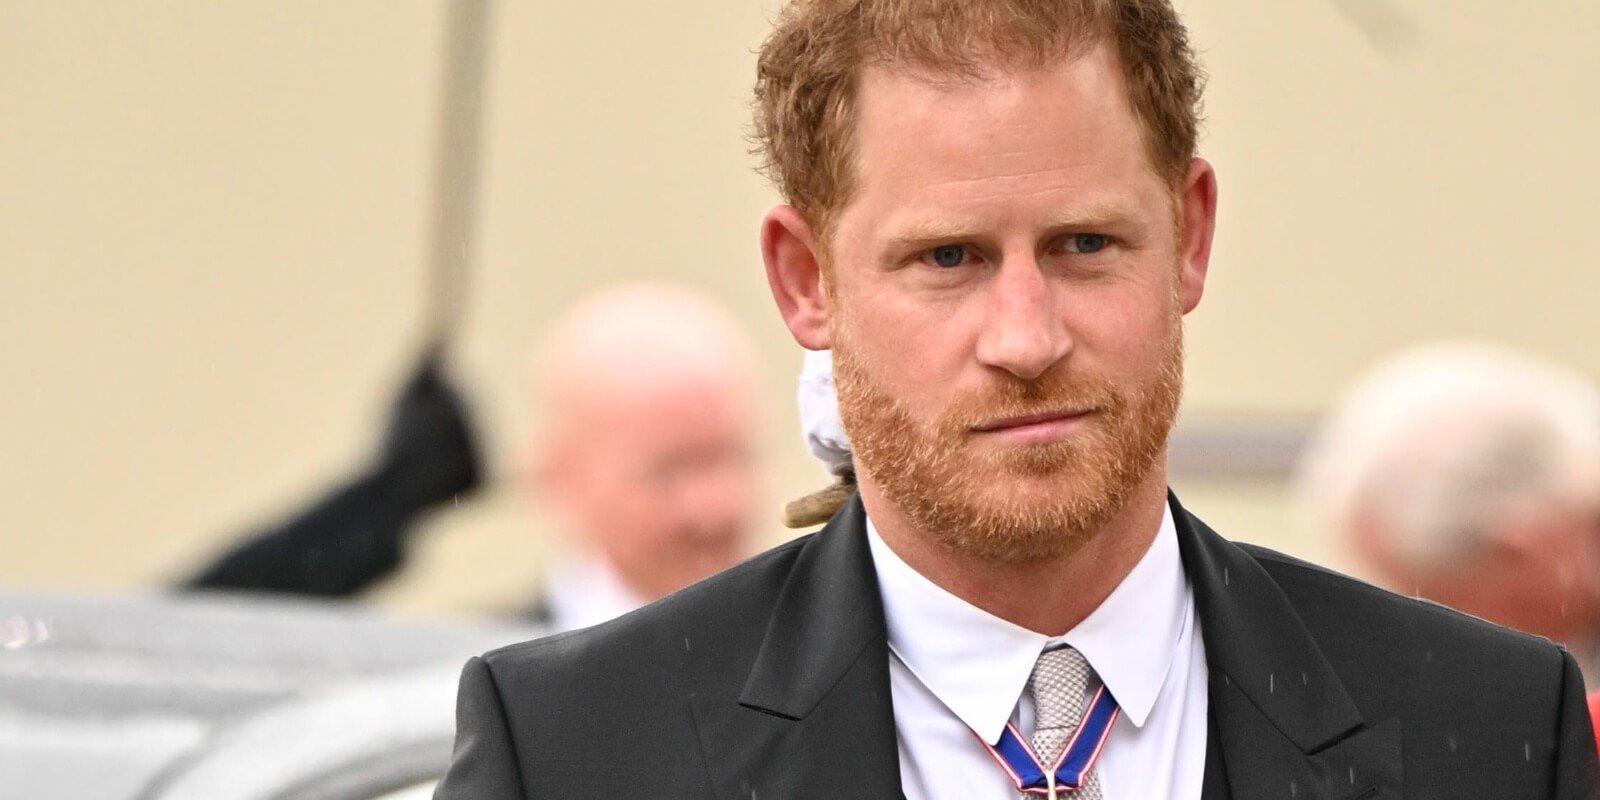 Prince Harry wore Meghan Markle's favorite designer at King Charles' coronation.